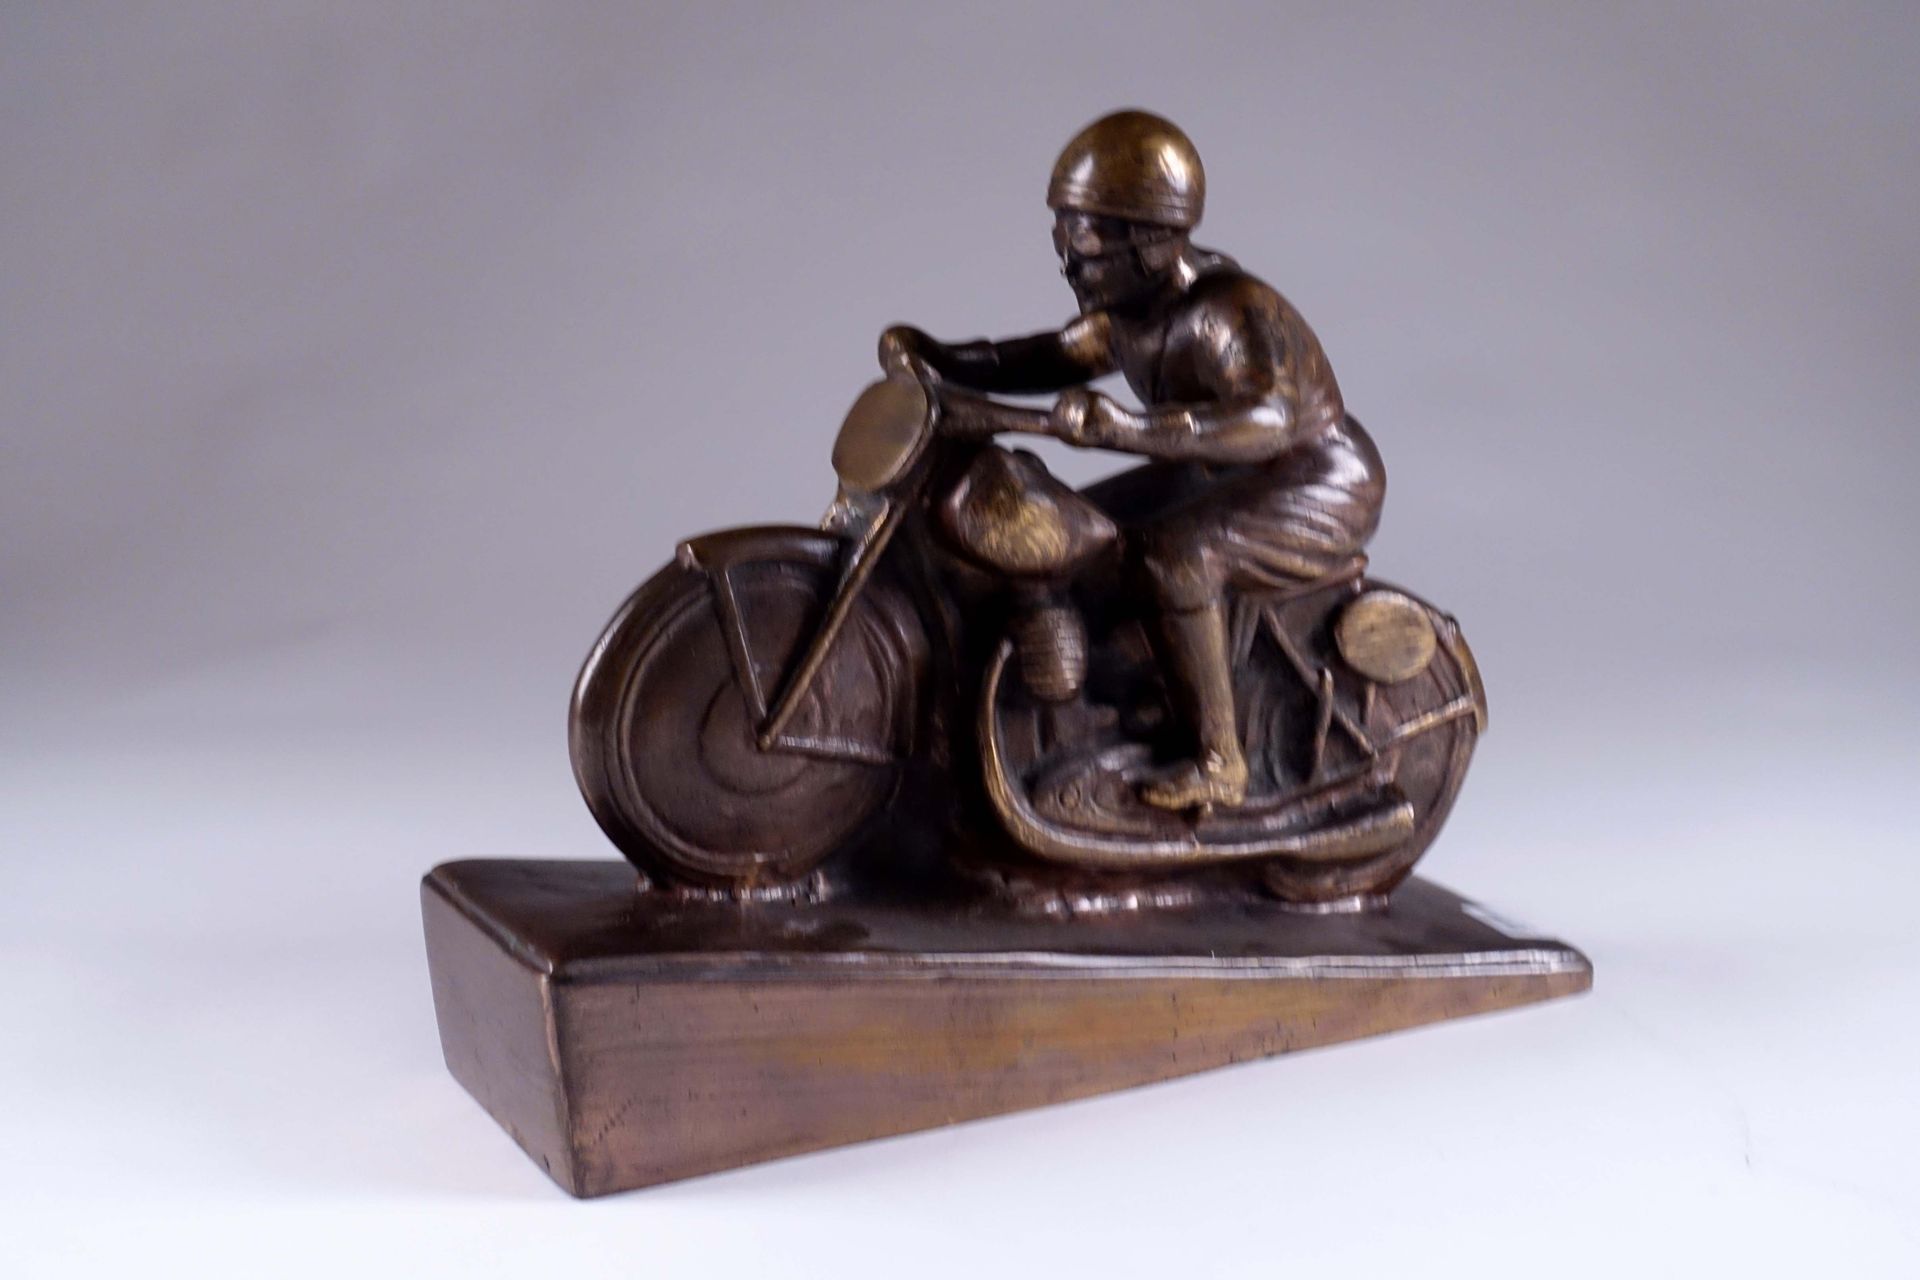 ANONYME. 约1930年。全速前进。抛光青铜证明，显示一个骑着大摩托全速前进的摩托车手。尺寸：38 x 30 x 11厘米。